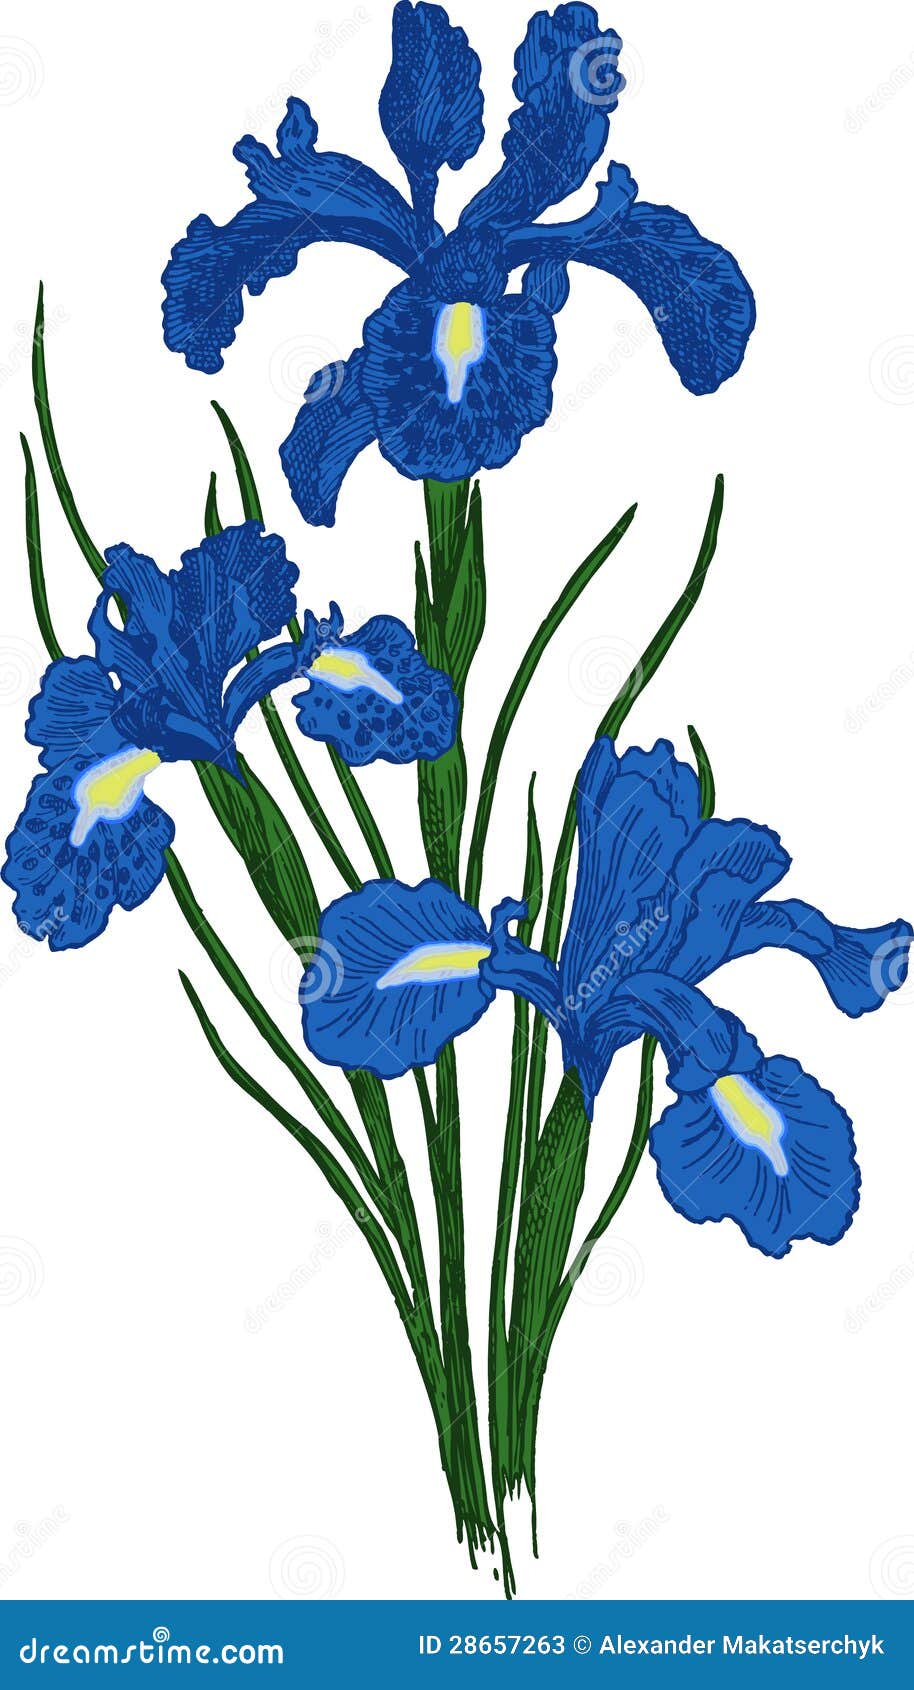 clipart iris flower - photo #40